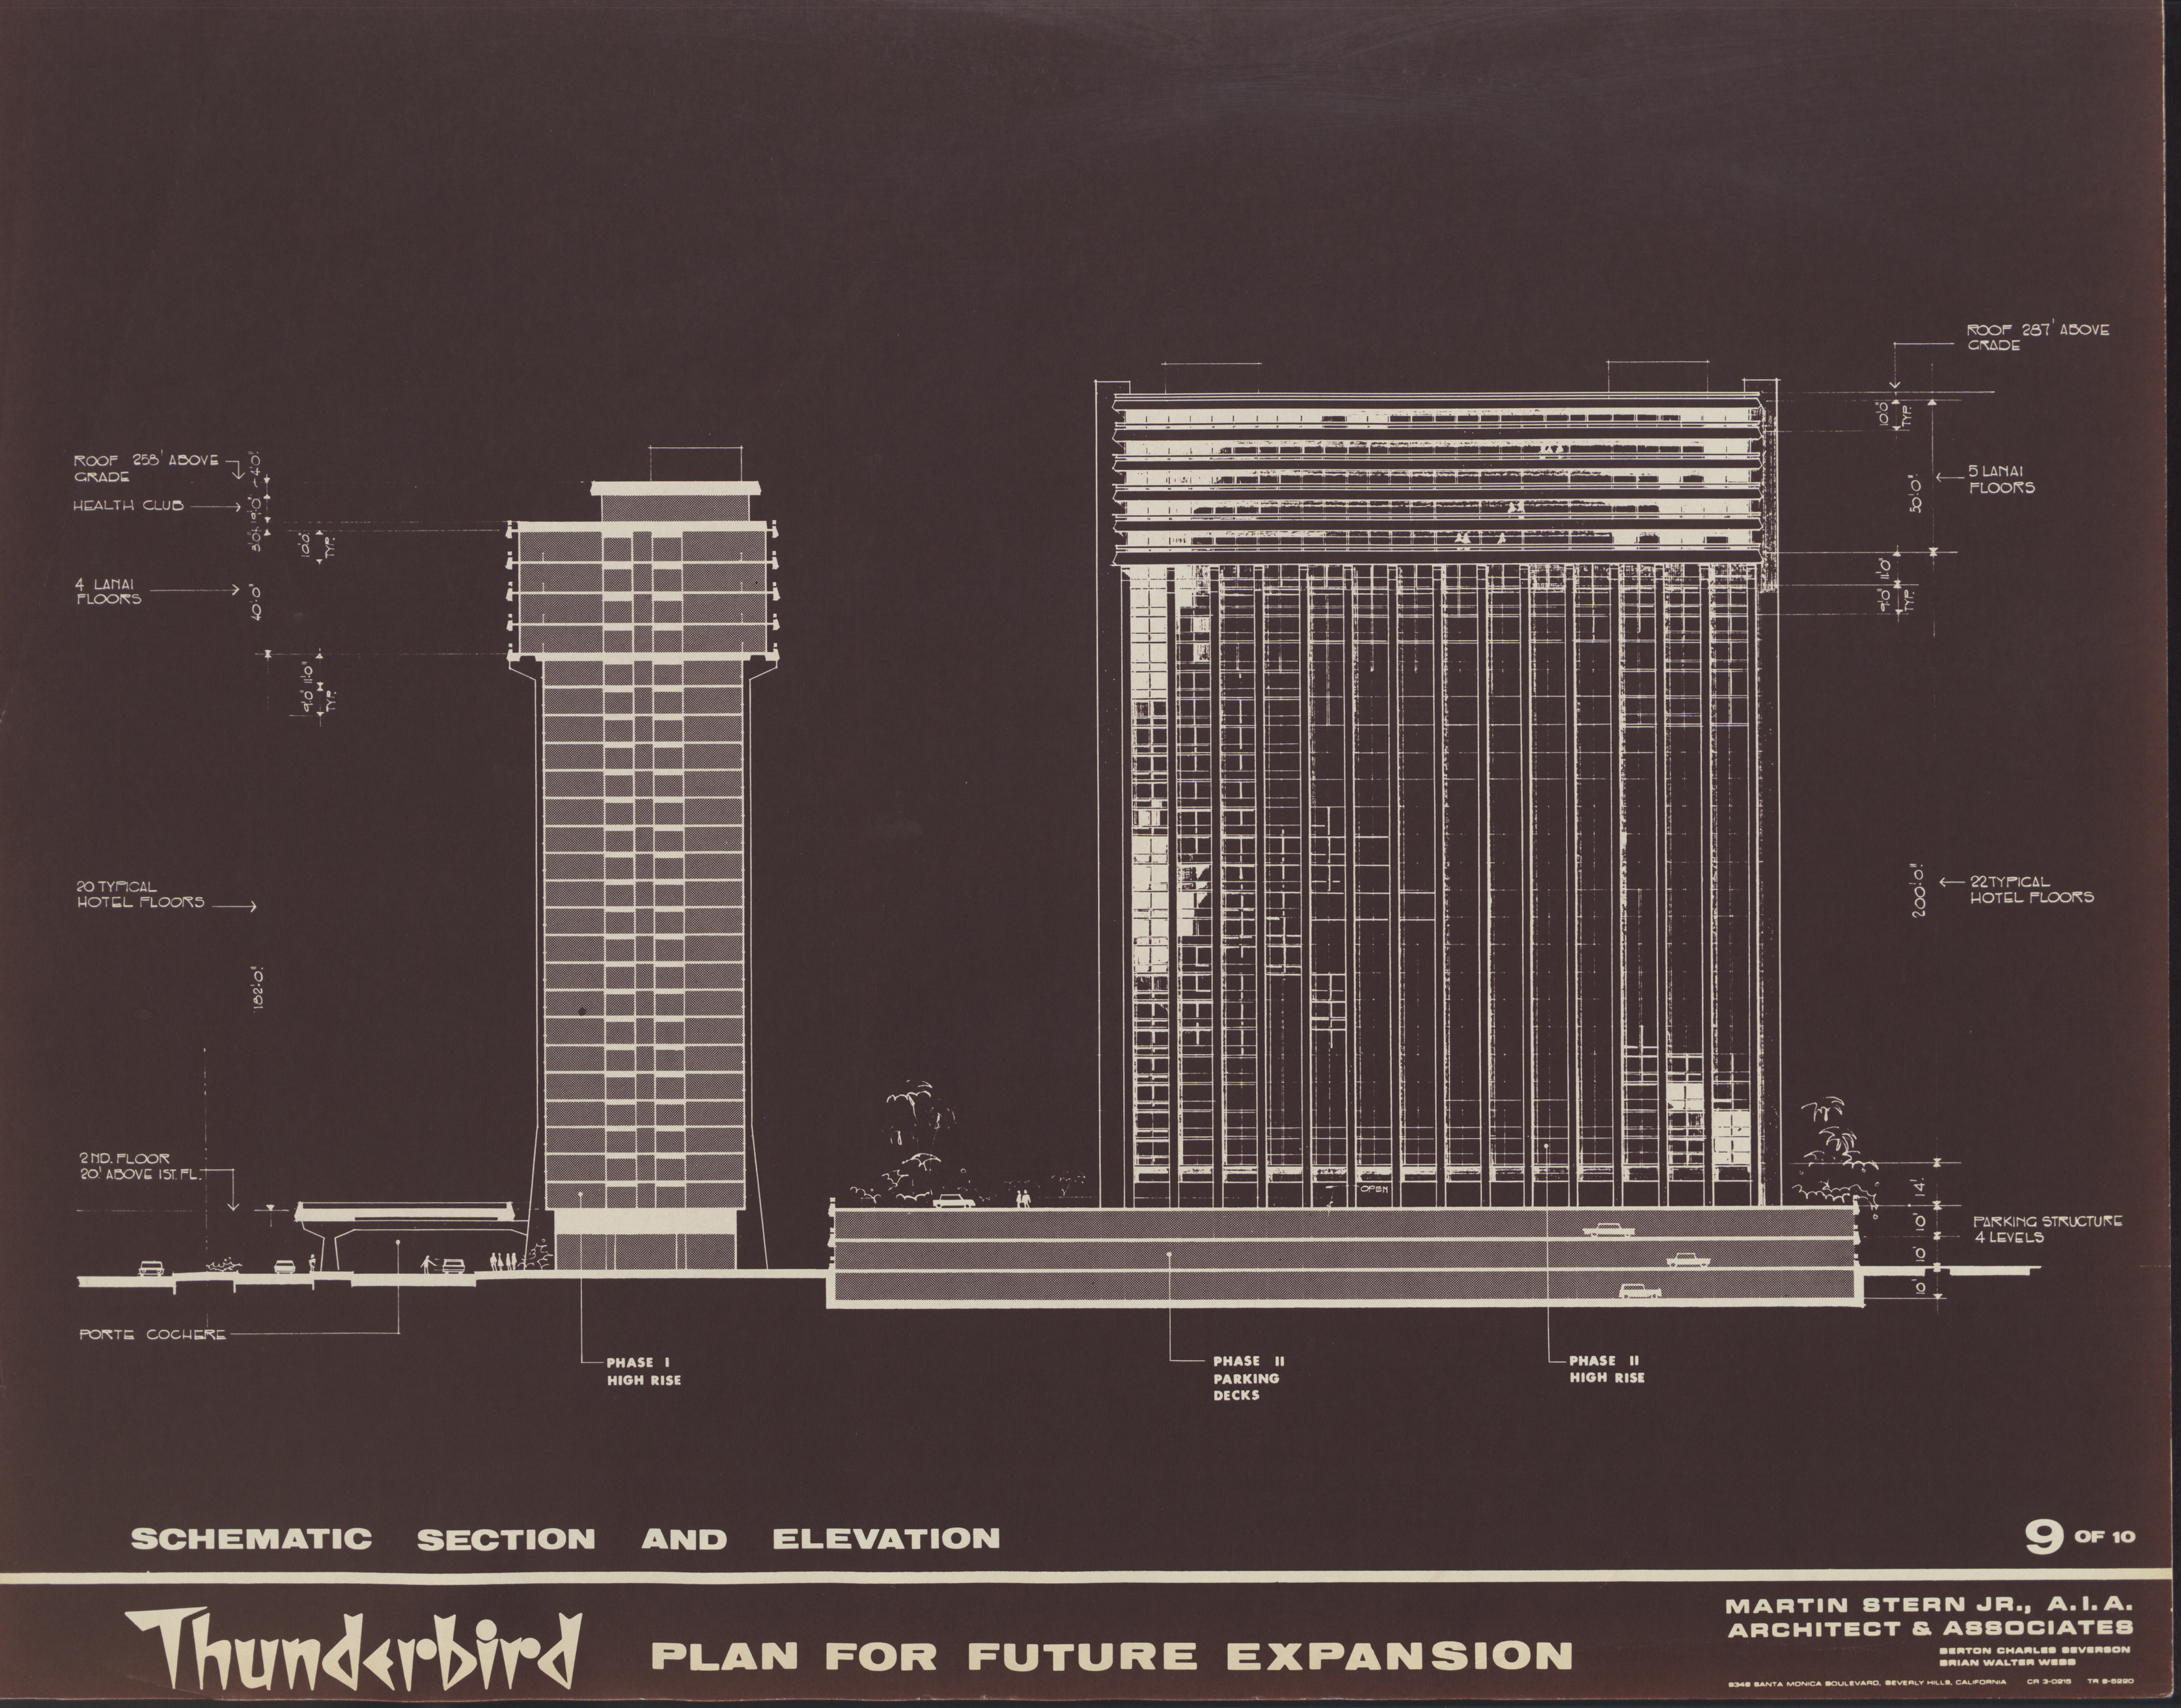 Thunderbird Plan for Future Expansion Proposal, image 9